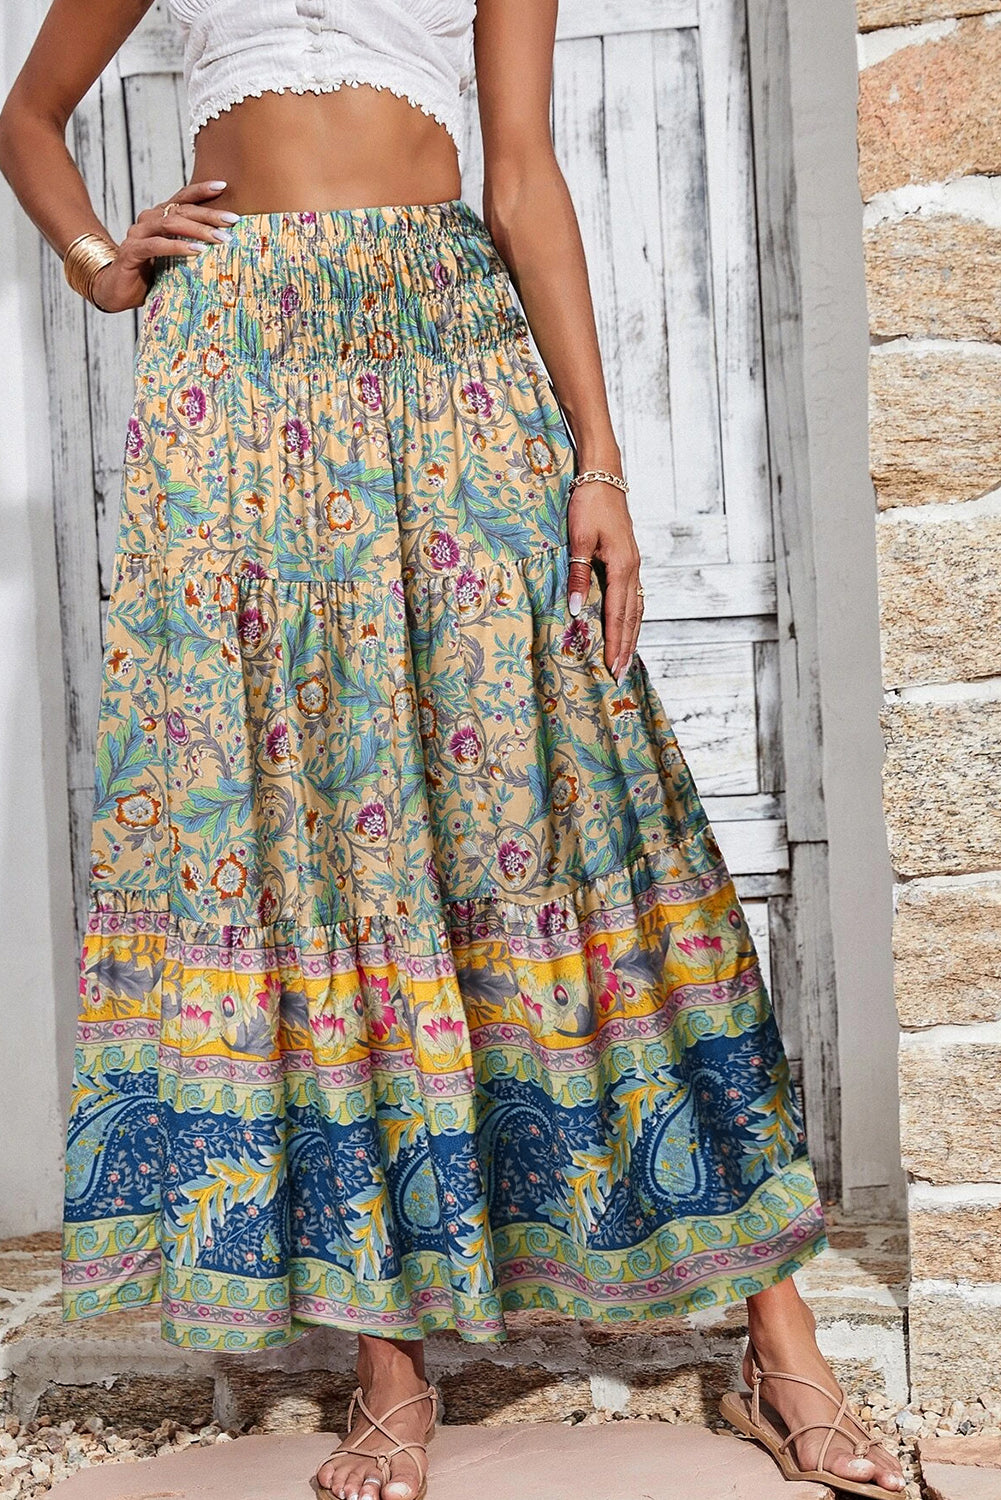 Lightweight, flowy maxi skirt featuring intricate floral designs